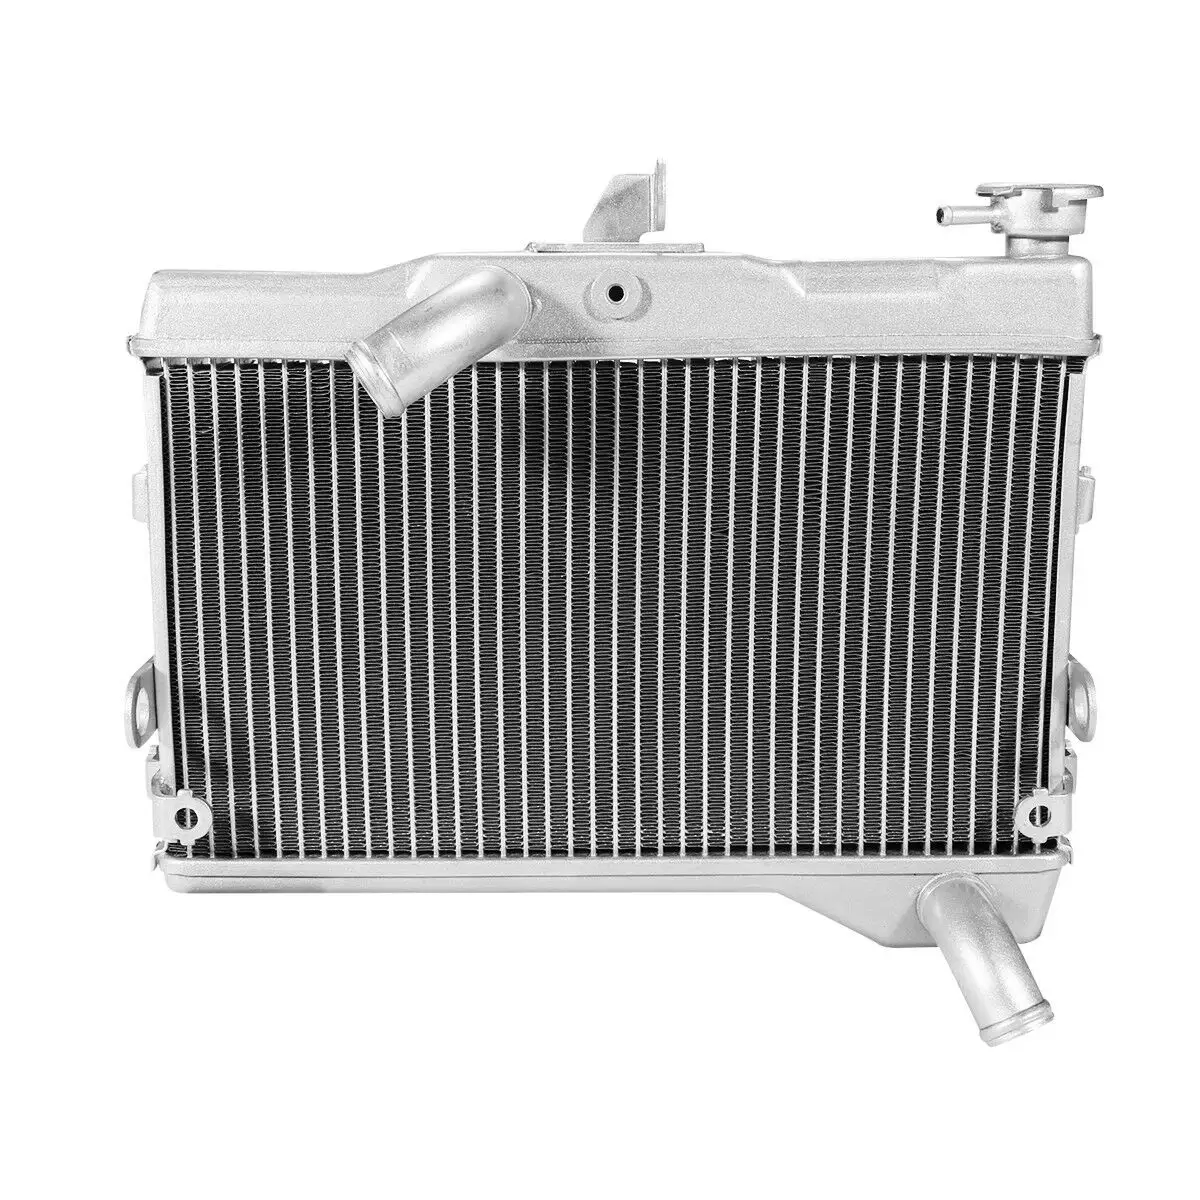 TCMT XF2301002-S Aluminum Radiator Cooler Cooling For YAMAHA FZ07 15-17 MT07 15-17 XSR700 18-19